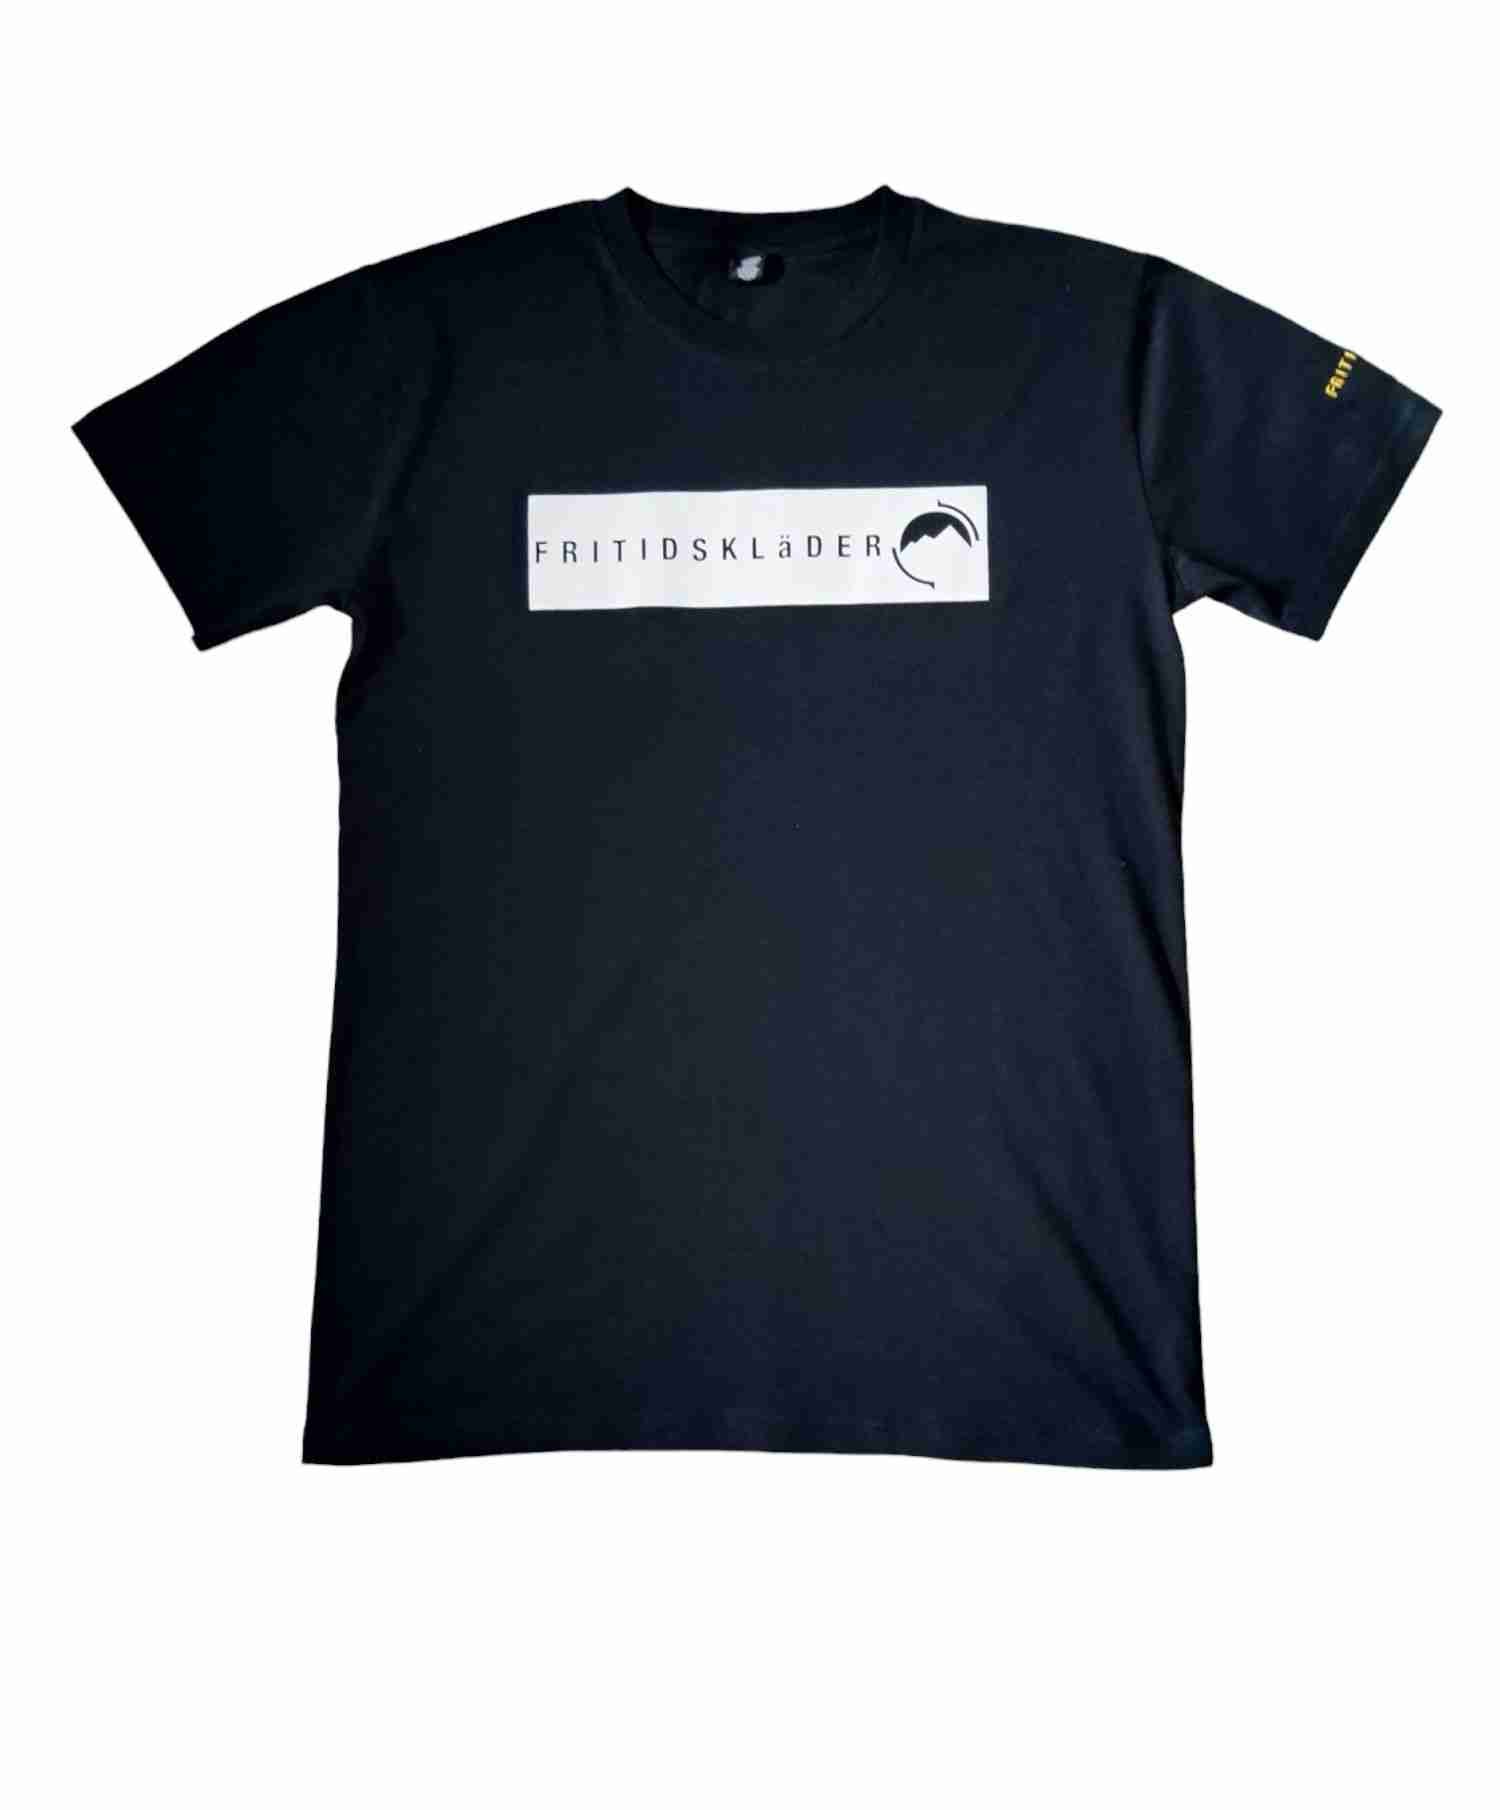 New Banner T-Shirts - Fritidsklader | Football Terrace Wear